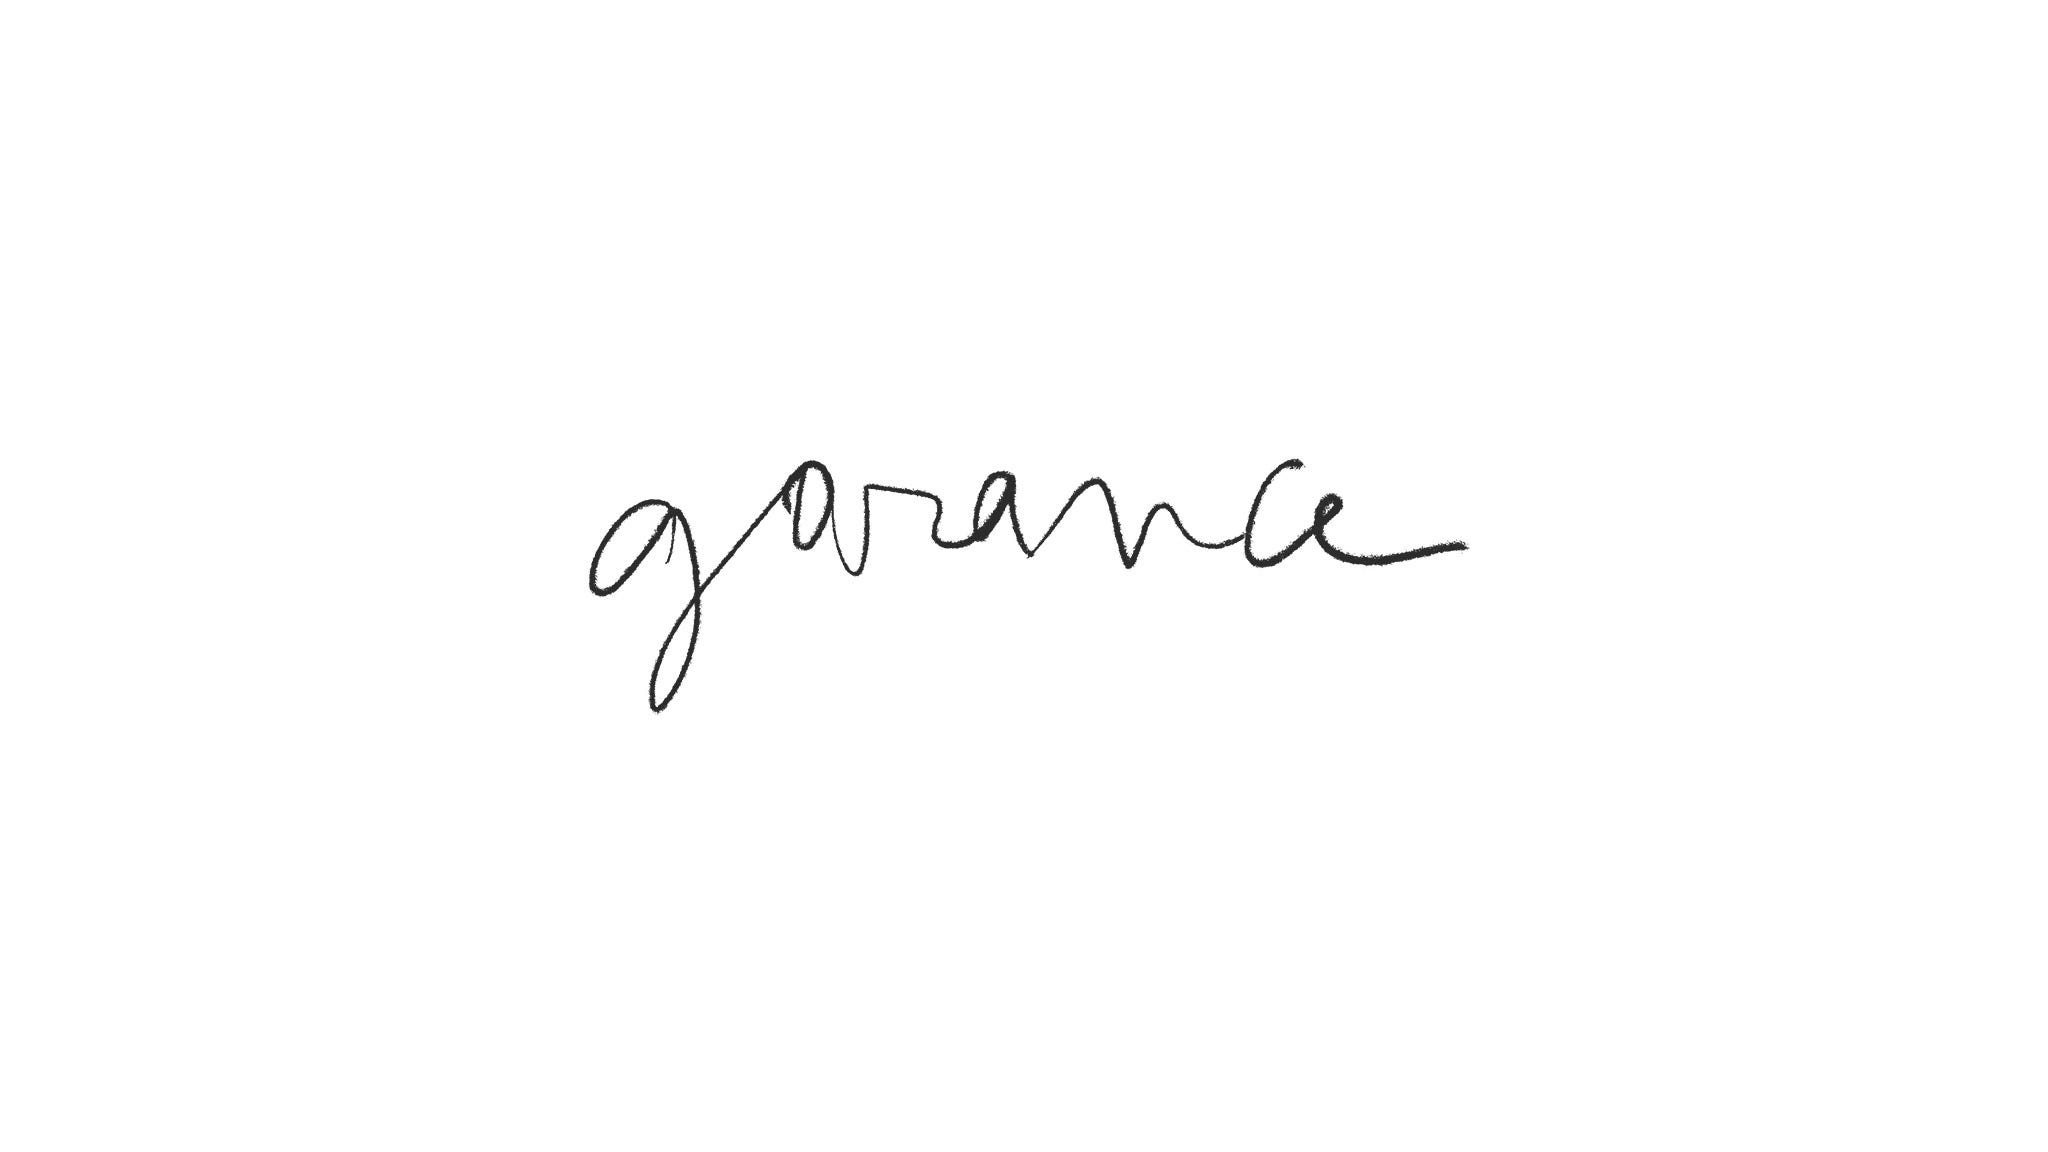 The Note #34: Let’s grow! - The High Light by Garance Doré